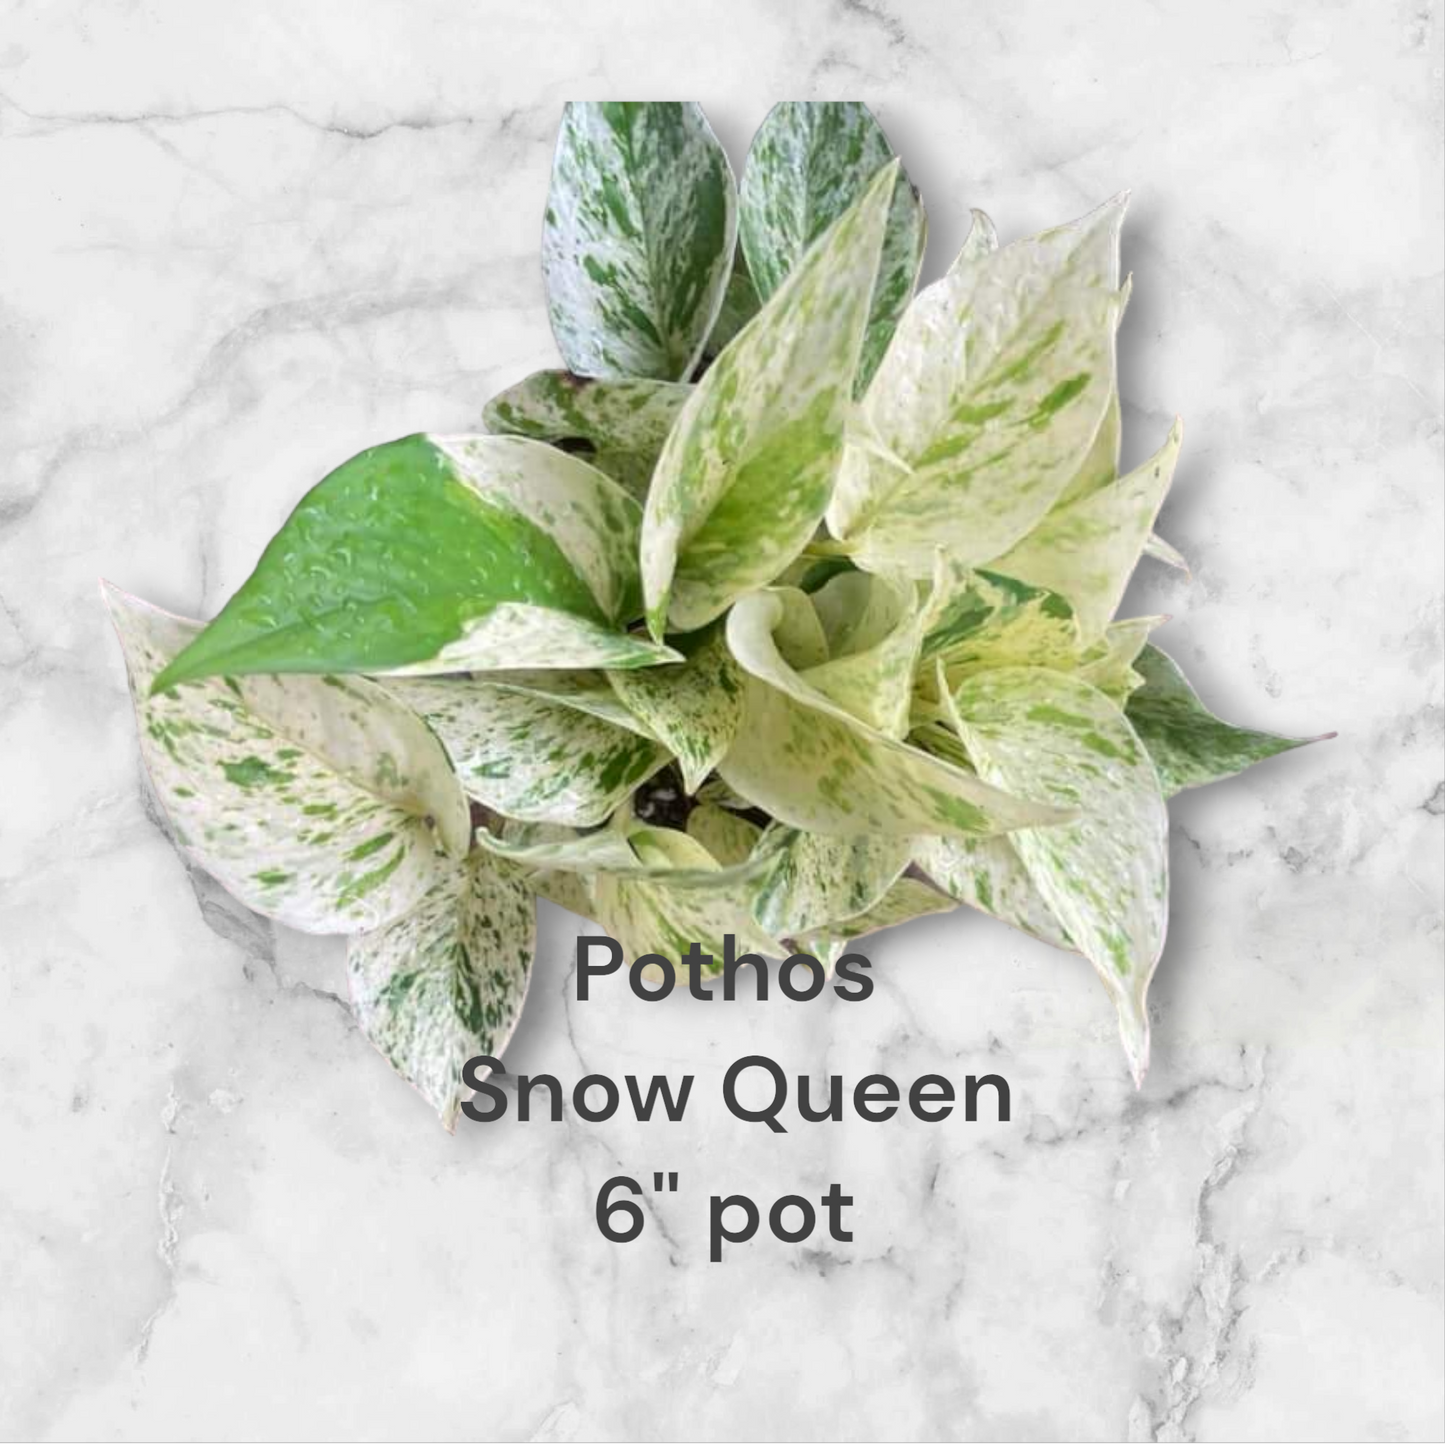 Epipremnum Pothos Snow Queen Six Inch Pot. Photo b4 Shipping